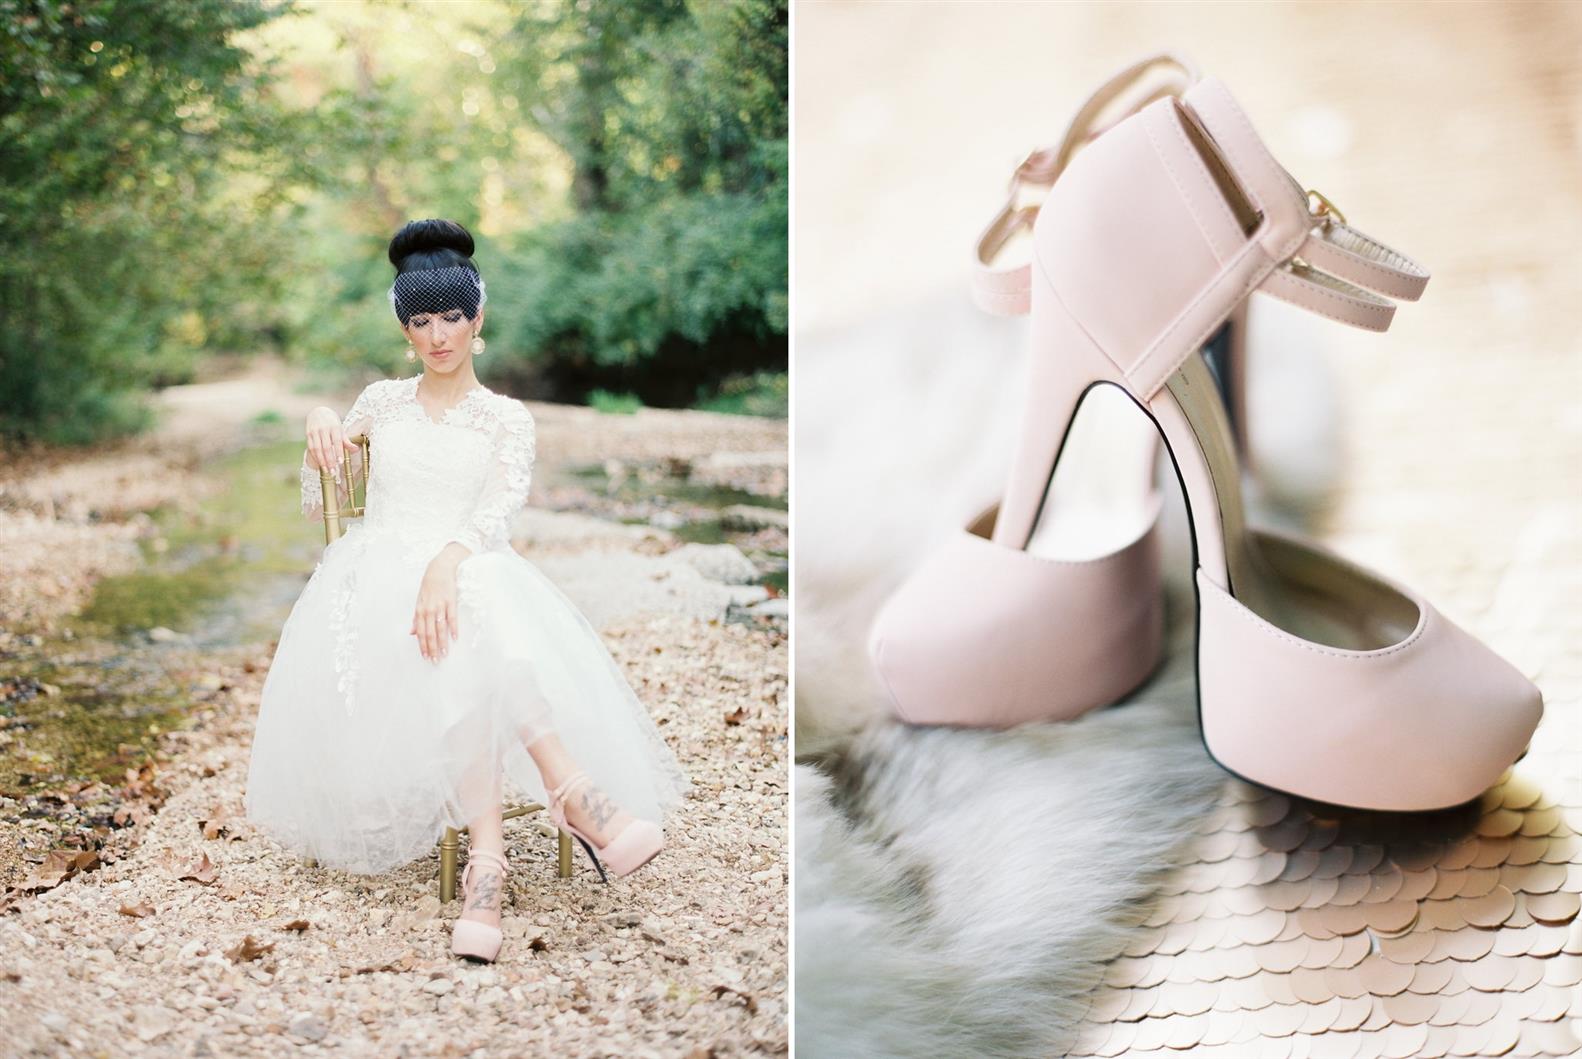 Bride & Bridal Shoes - A Stylish Modern-Vintage Blush & Gold Wedding Inspiration Shoot